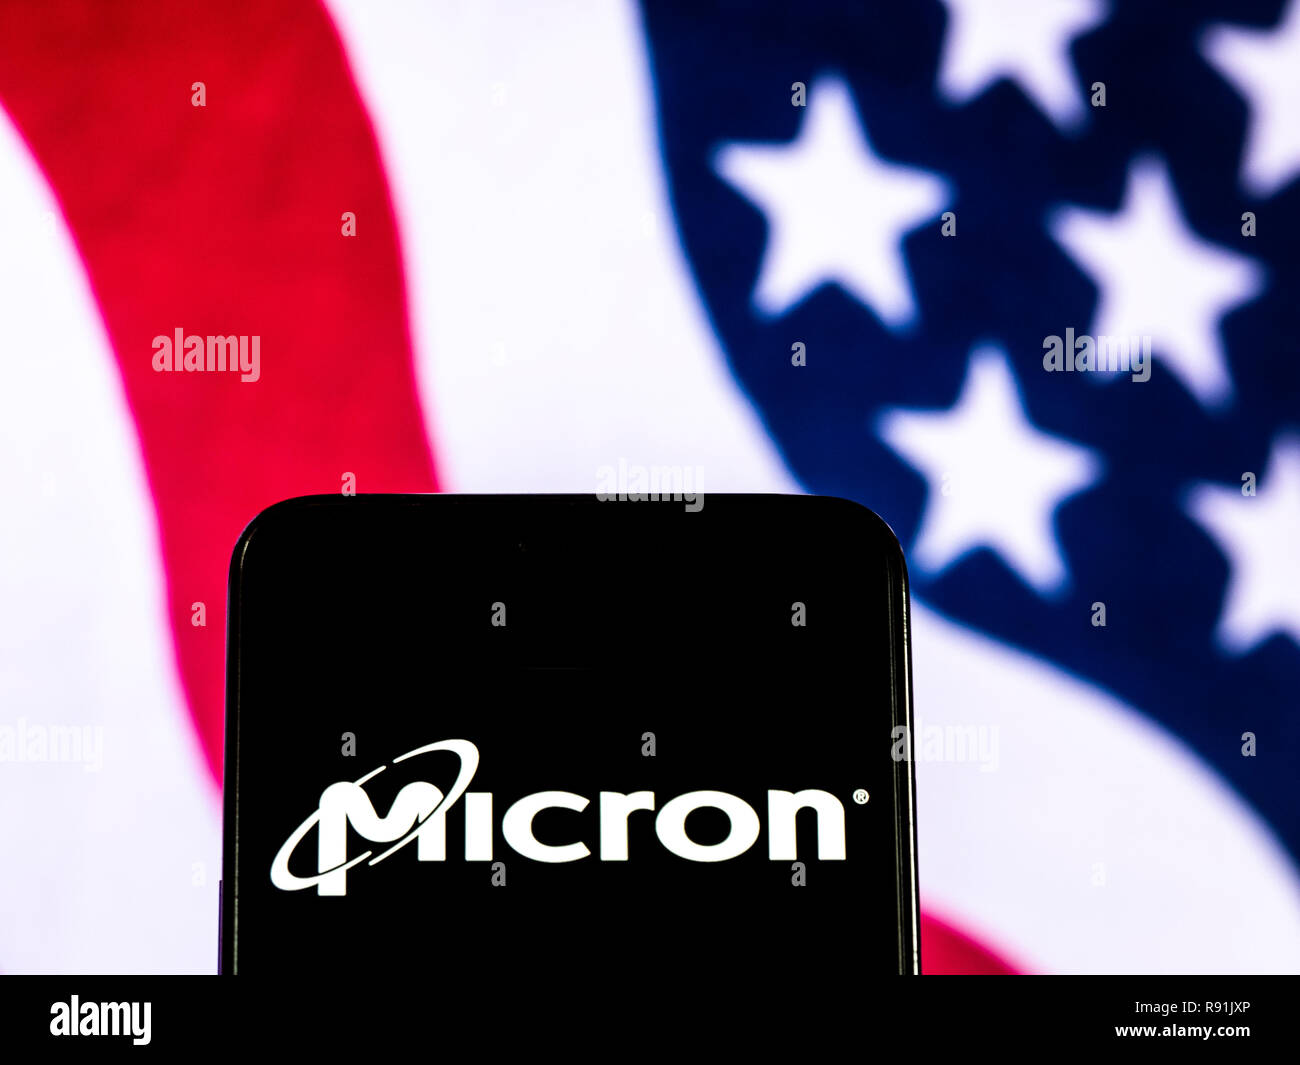 Micron Technology Corporation logo seen displayed on smart phone Stock Photo